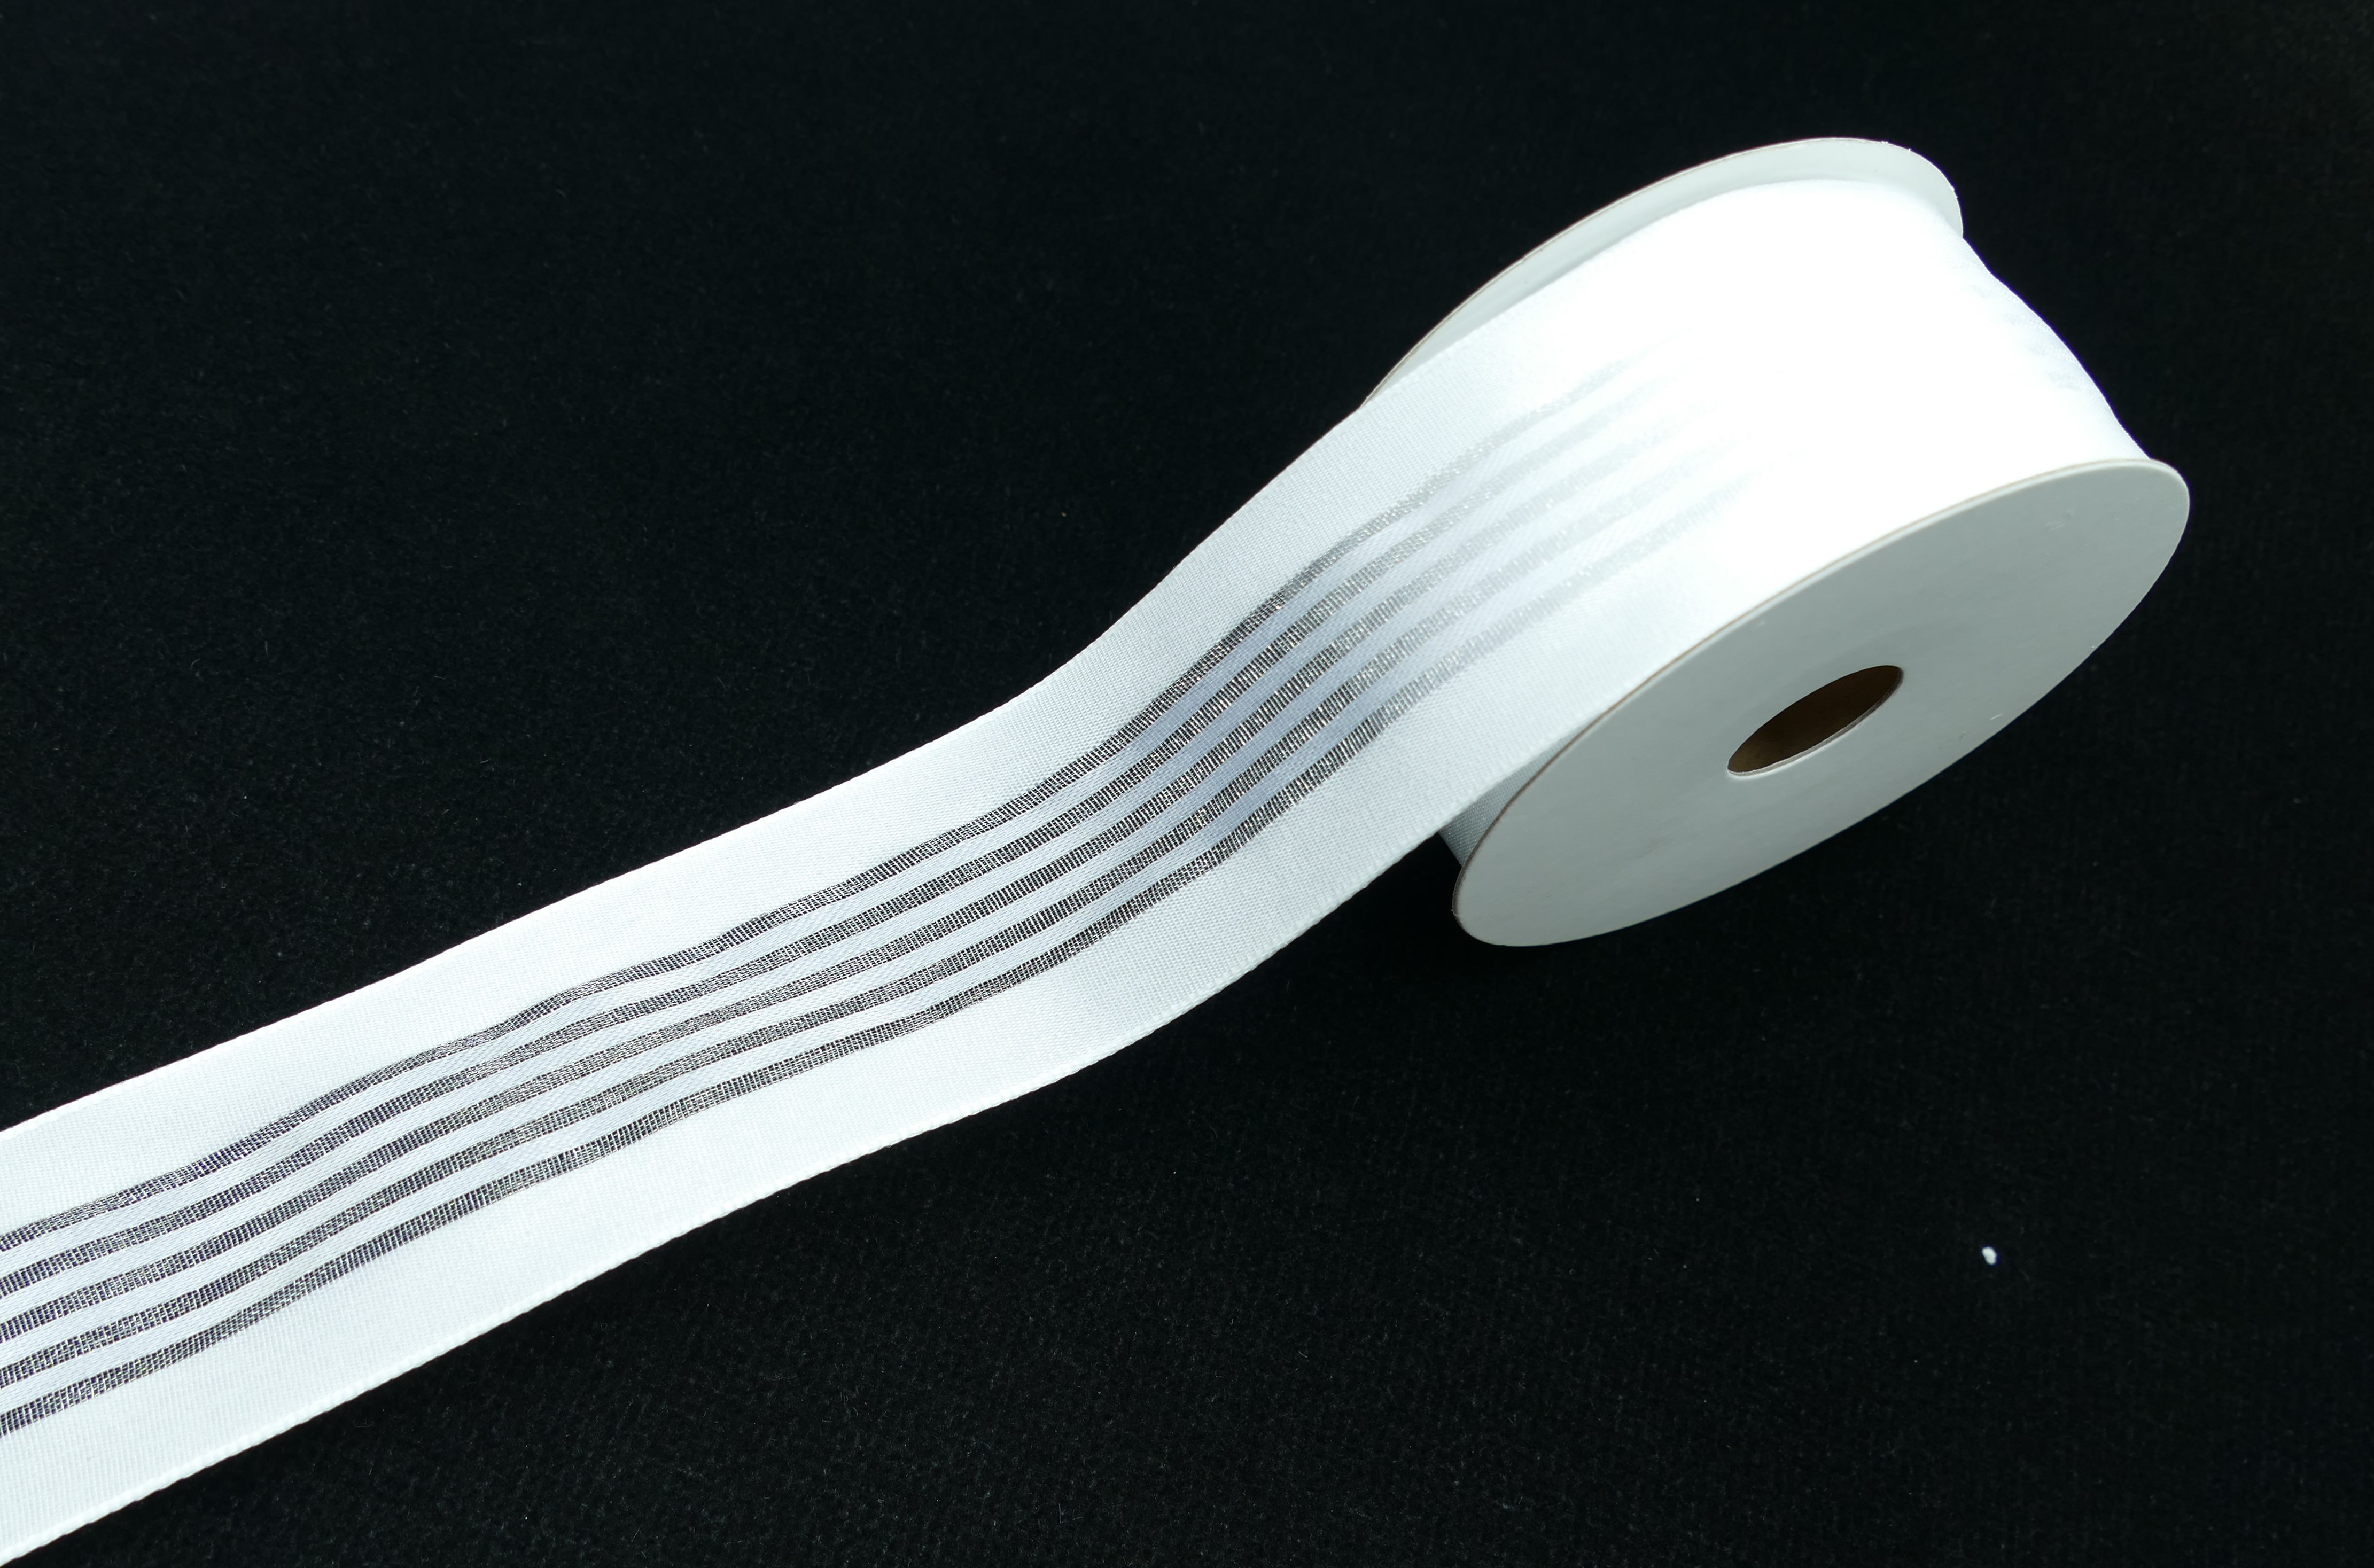 Pearl White Metallic Sheer Wired Craft Organza Ribbon 2.5 x 25 Yards